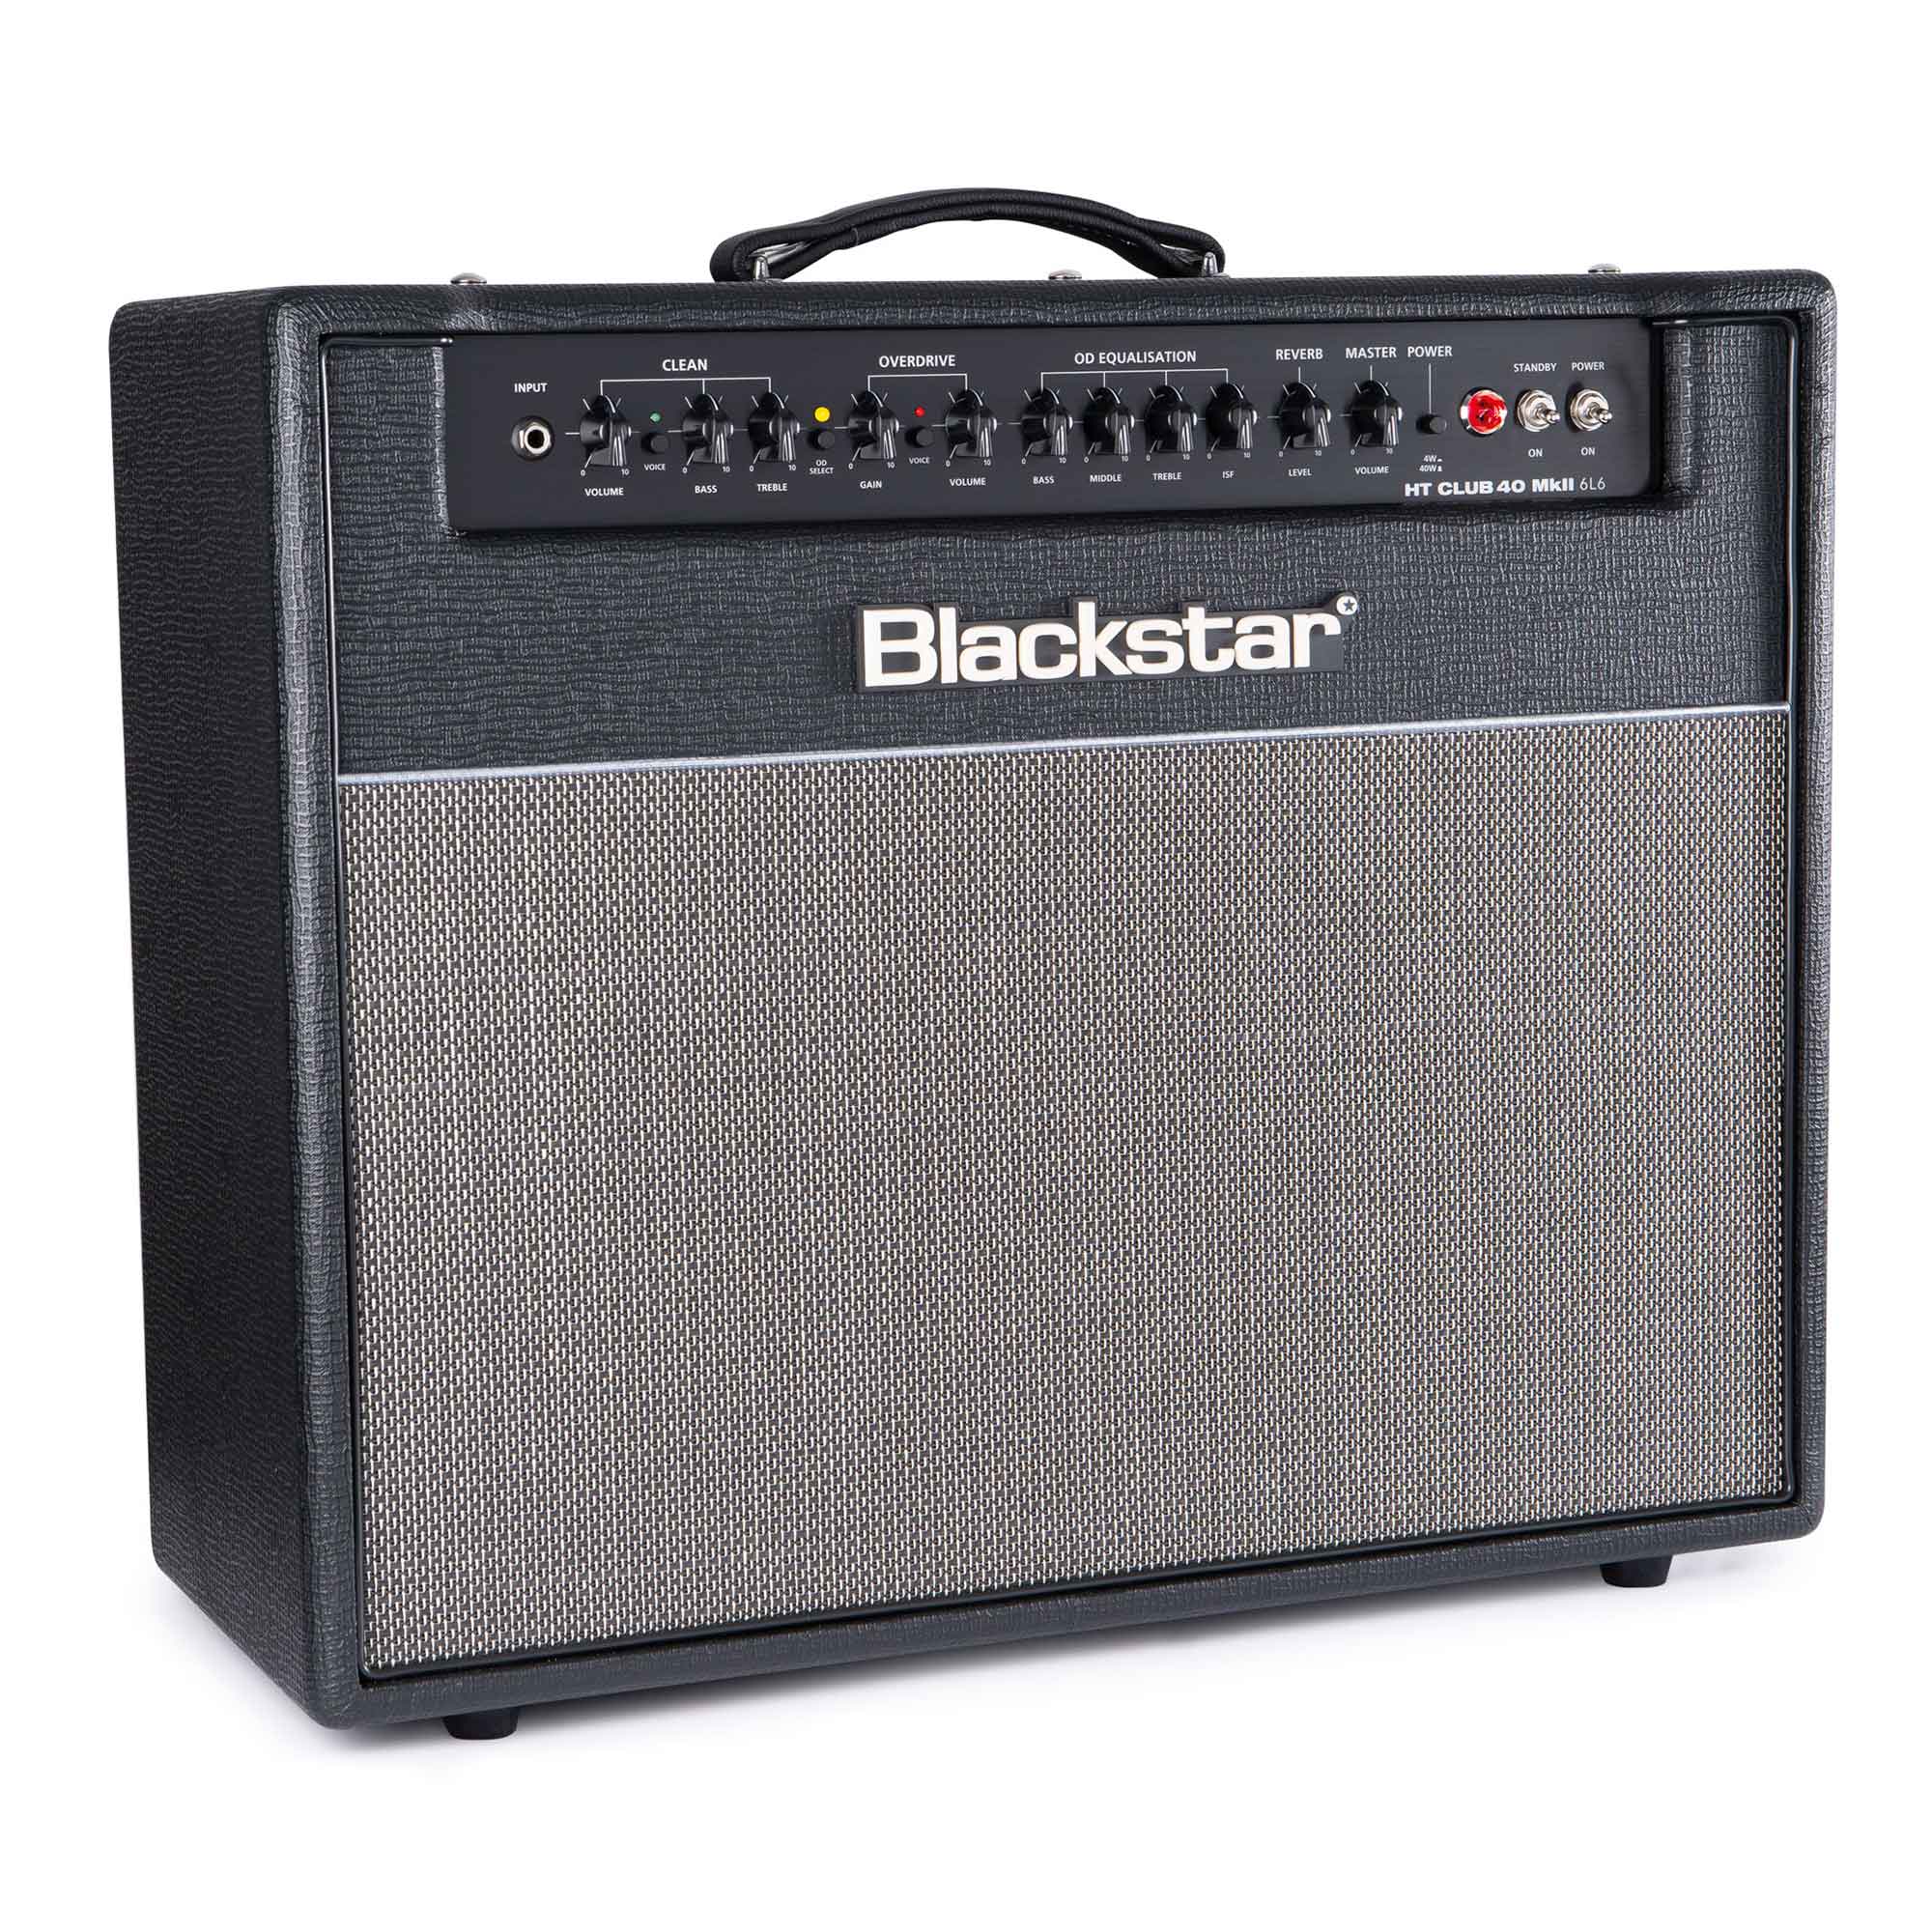 Blackstar Ht Club 40 Mkii 6l6 40w 1x12 Black - Ampli Guitare Électrique Combo - Variation 1